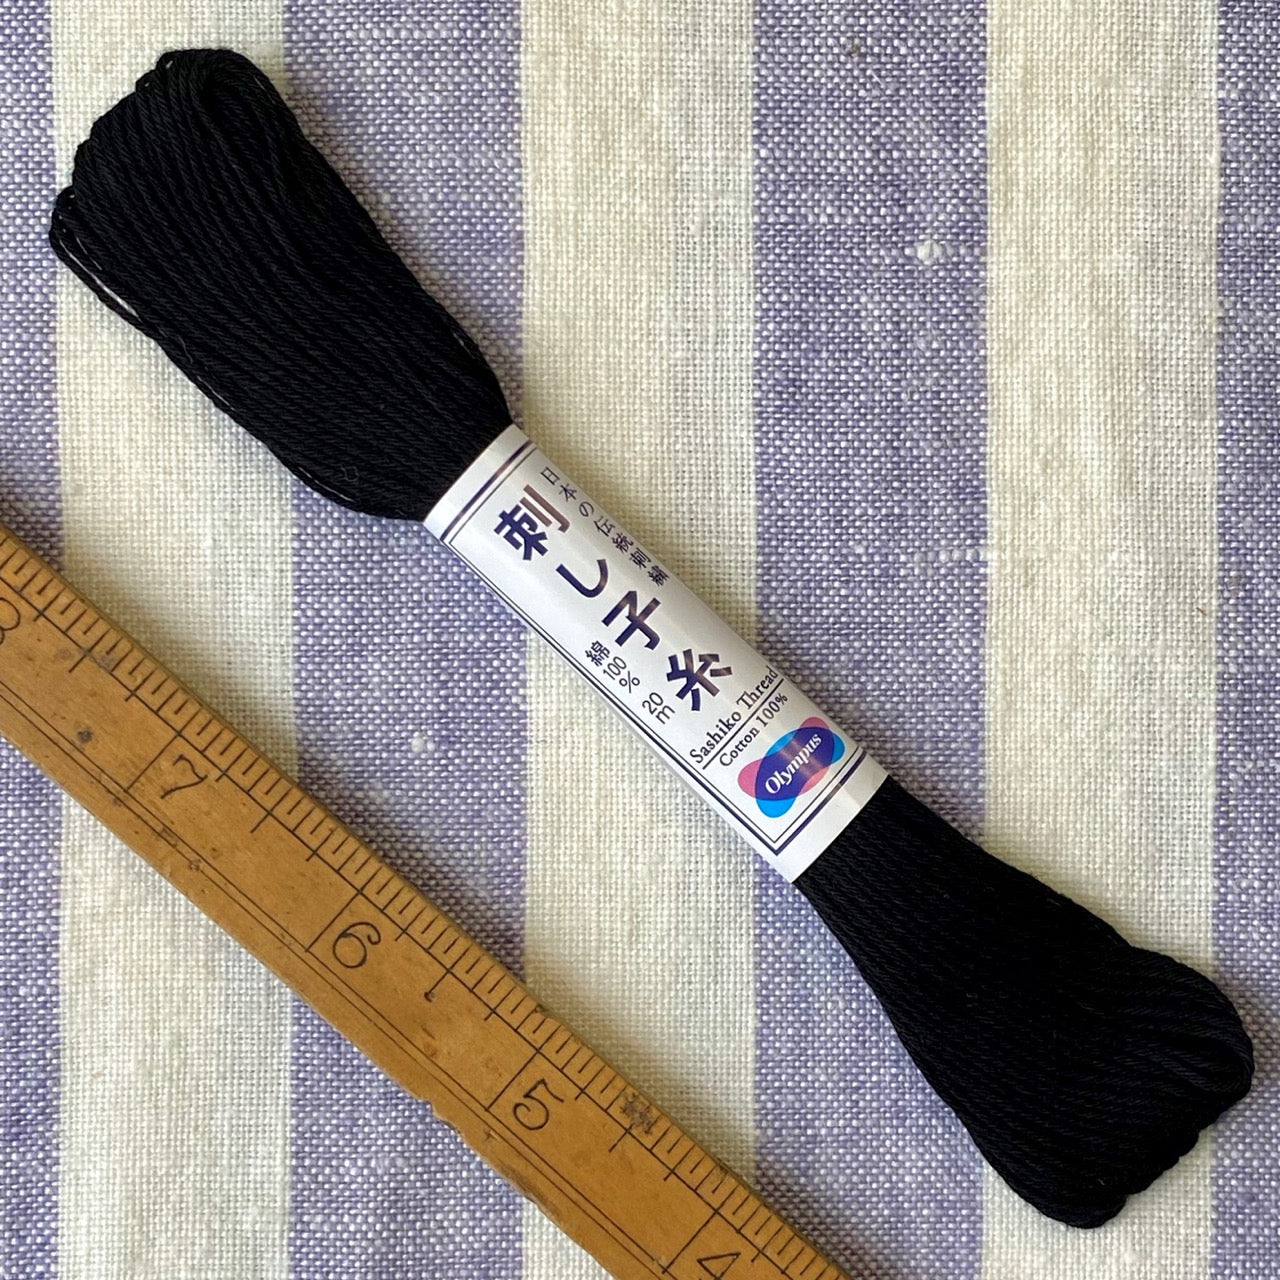 Thin Sashiko Thread, Black